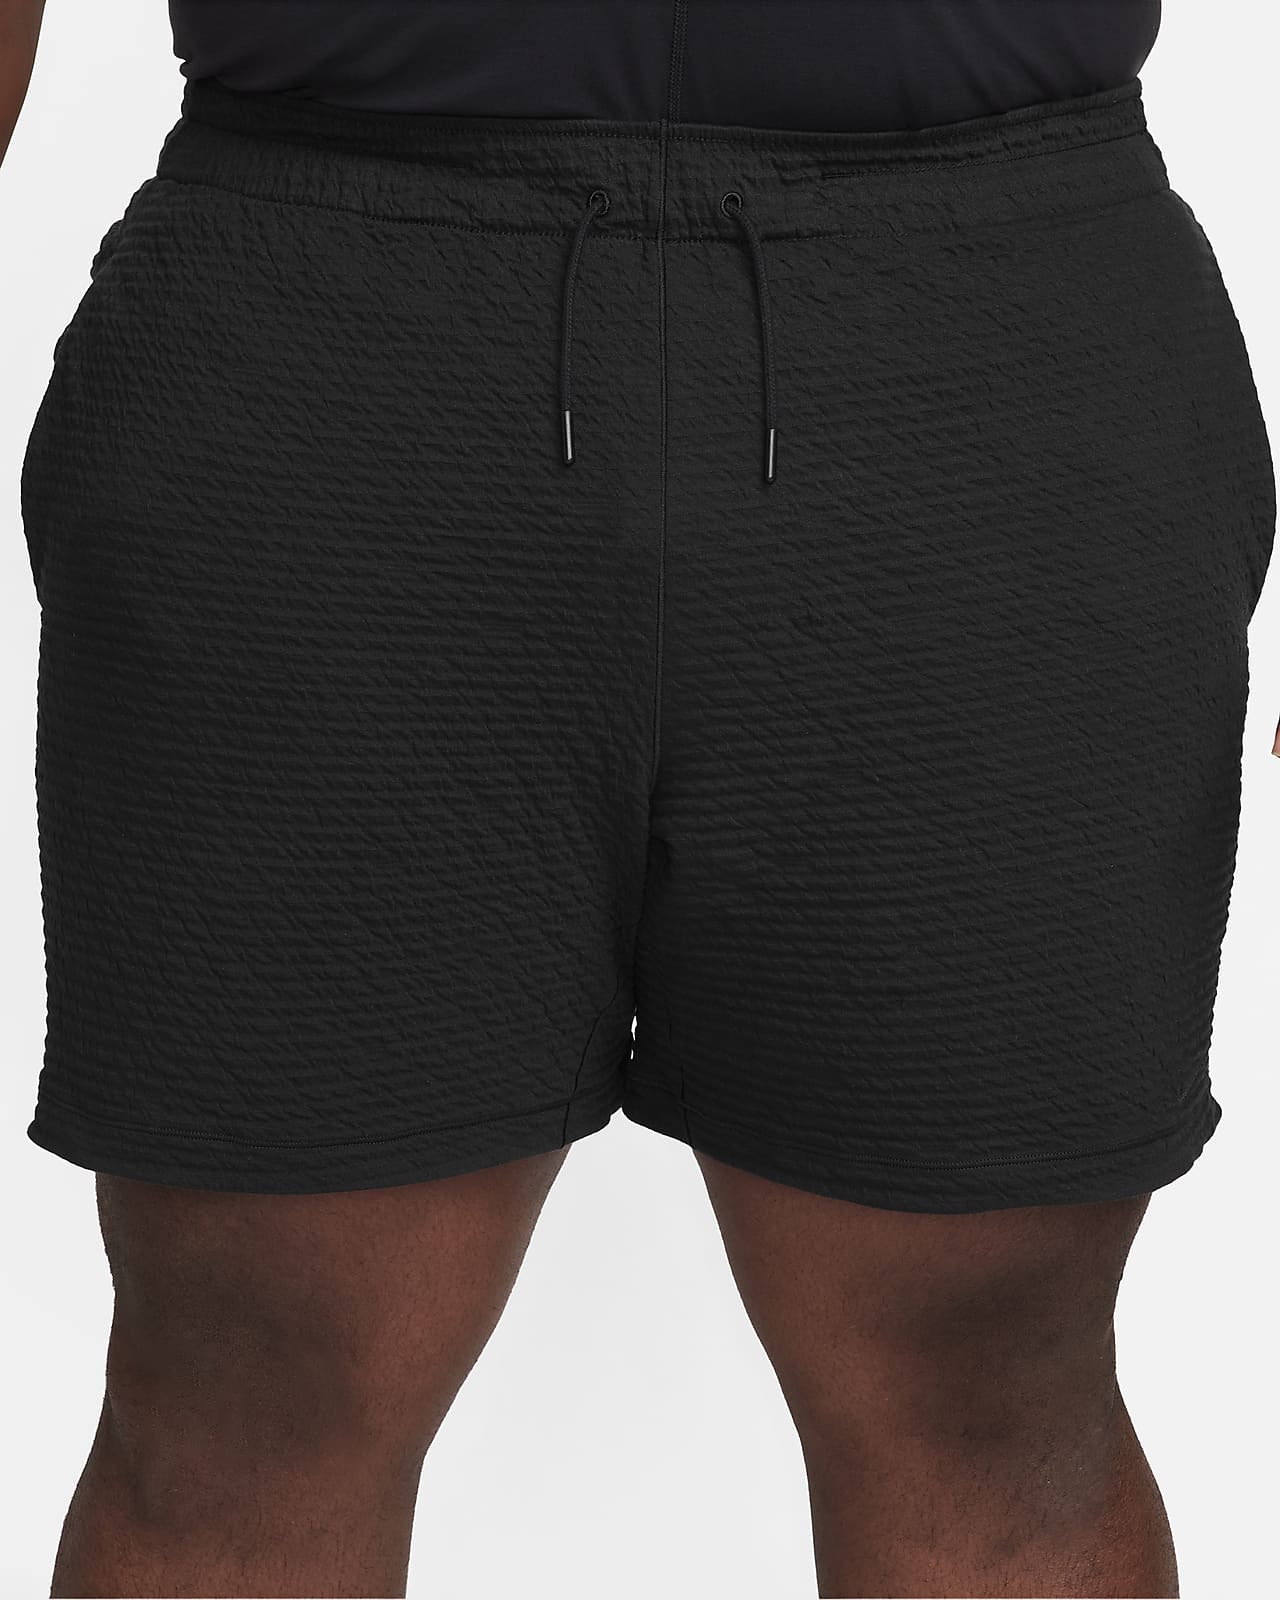 Black Activewear Shorts Women, Workout Shorts, Bermua Pants, Cotton Shorts,  Short Pants, Gym Shorts, Workout Wear, Women Sweatpants, -  Israel